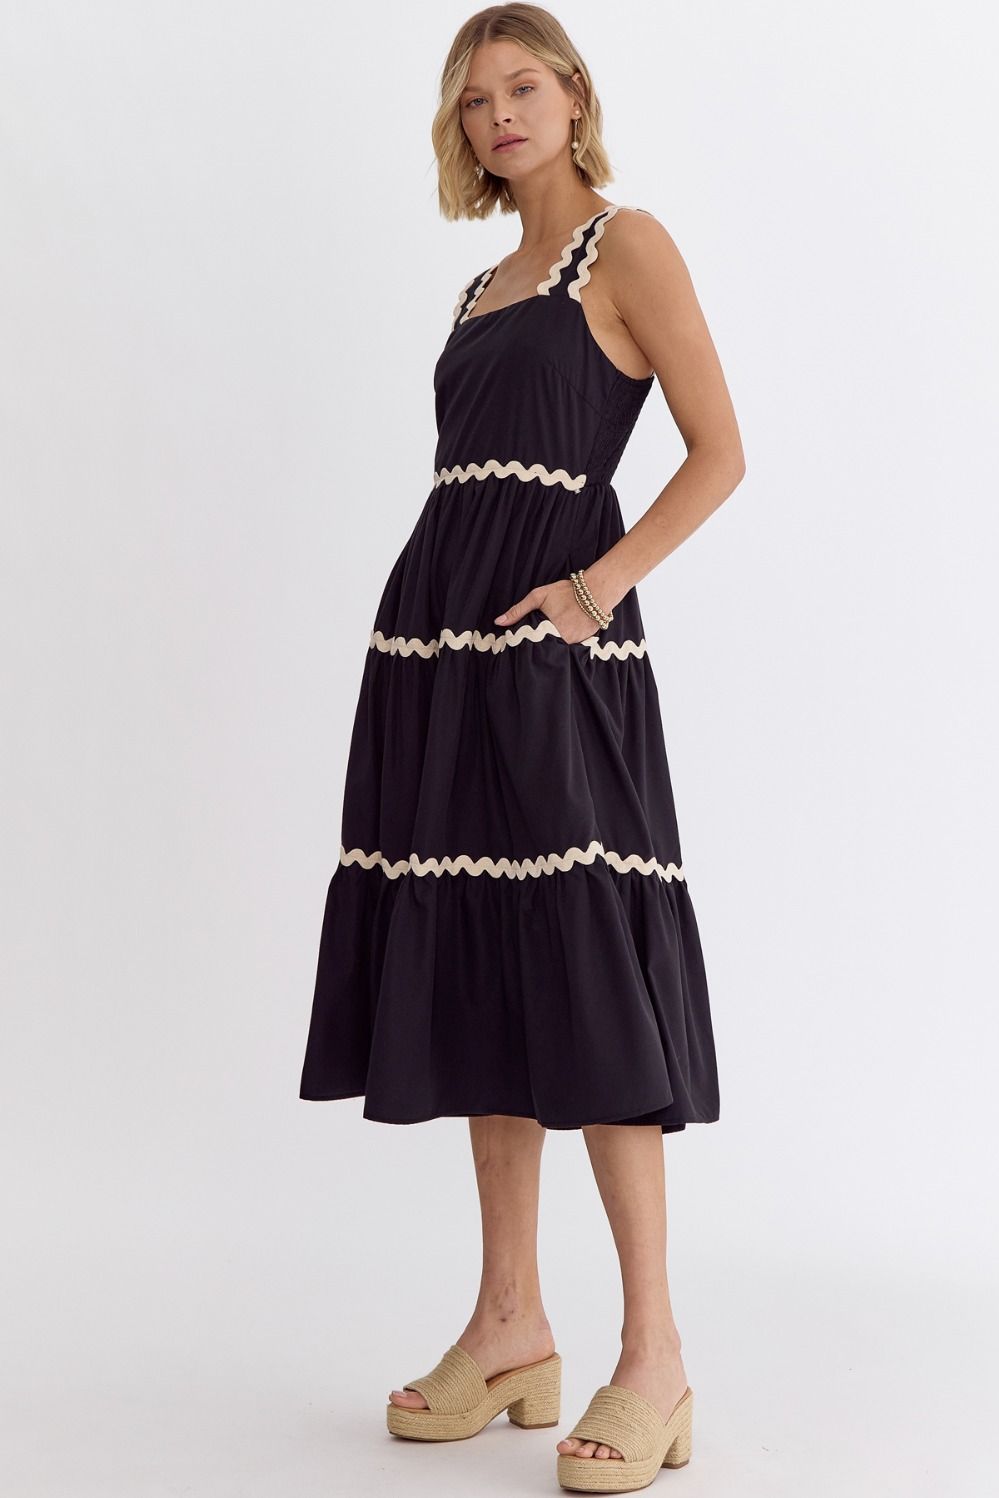 ENTRO INC Women's Dresses Sleeveless Rick Rack Trimming Midi Dress || David's Clothing